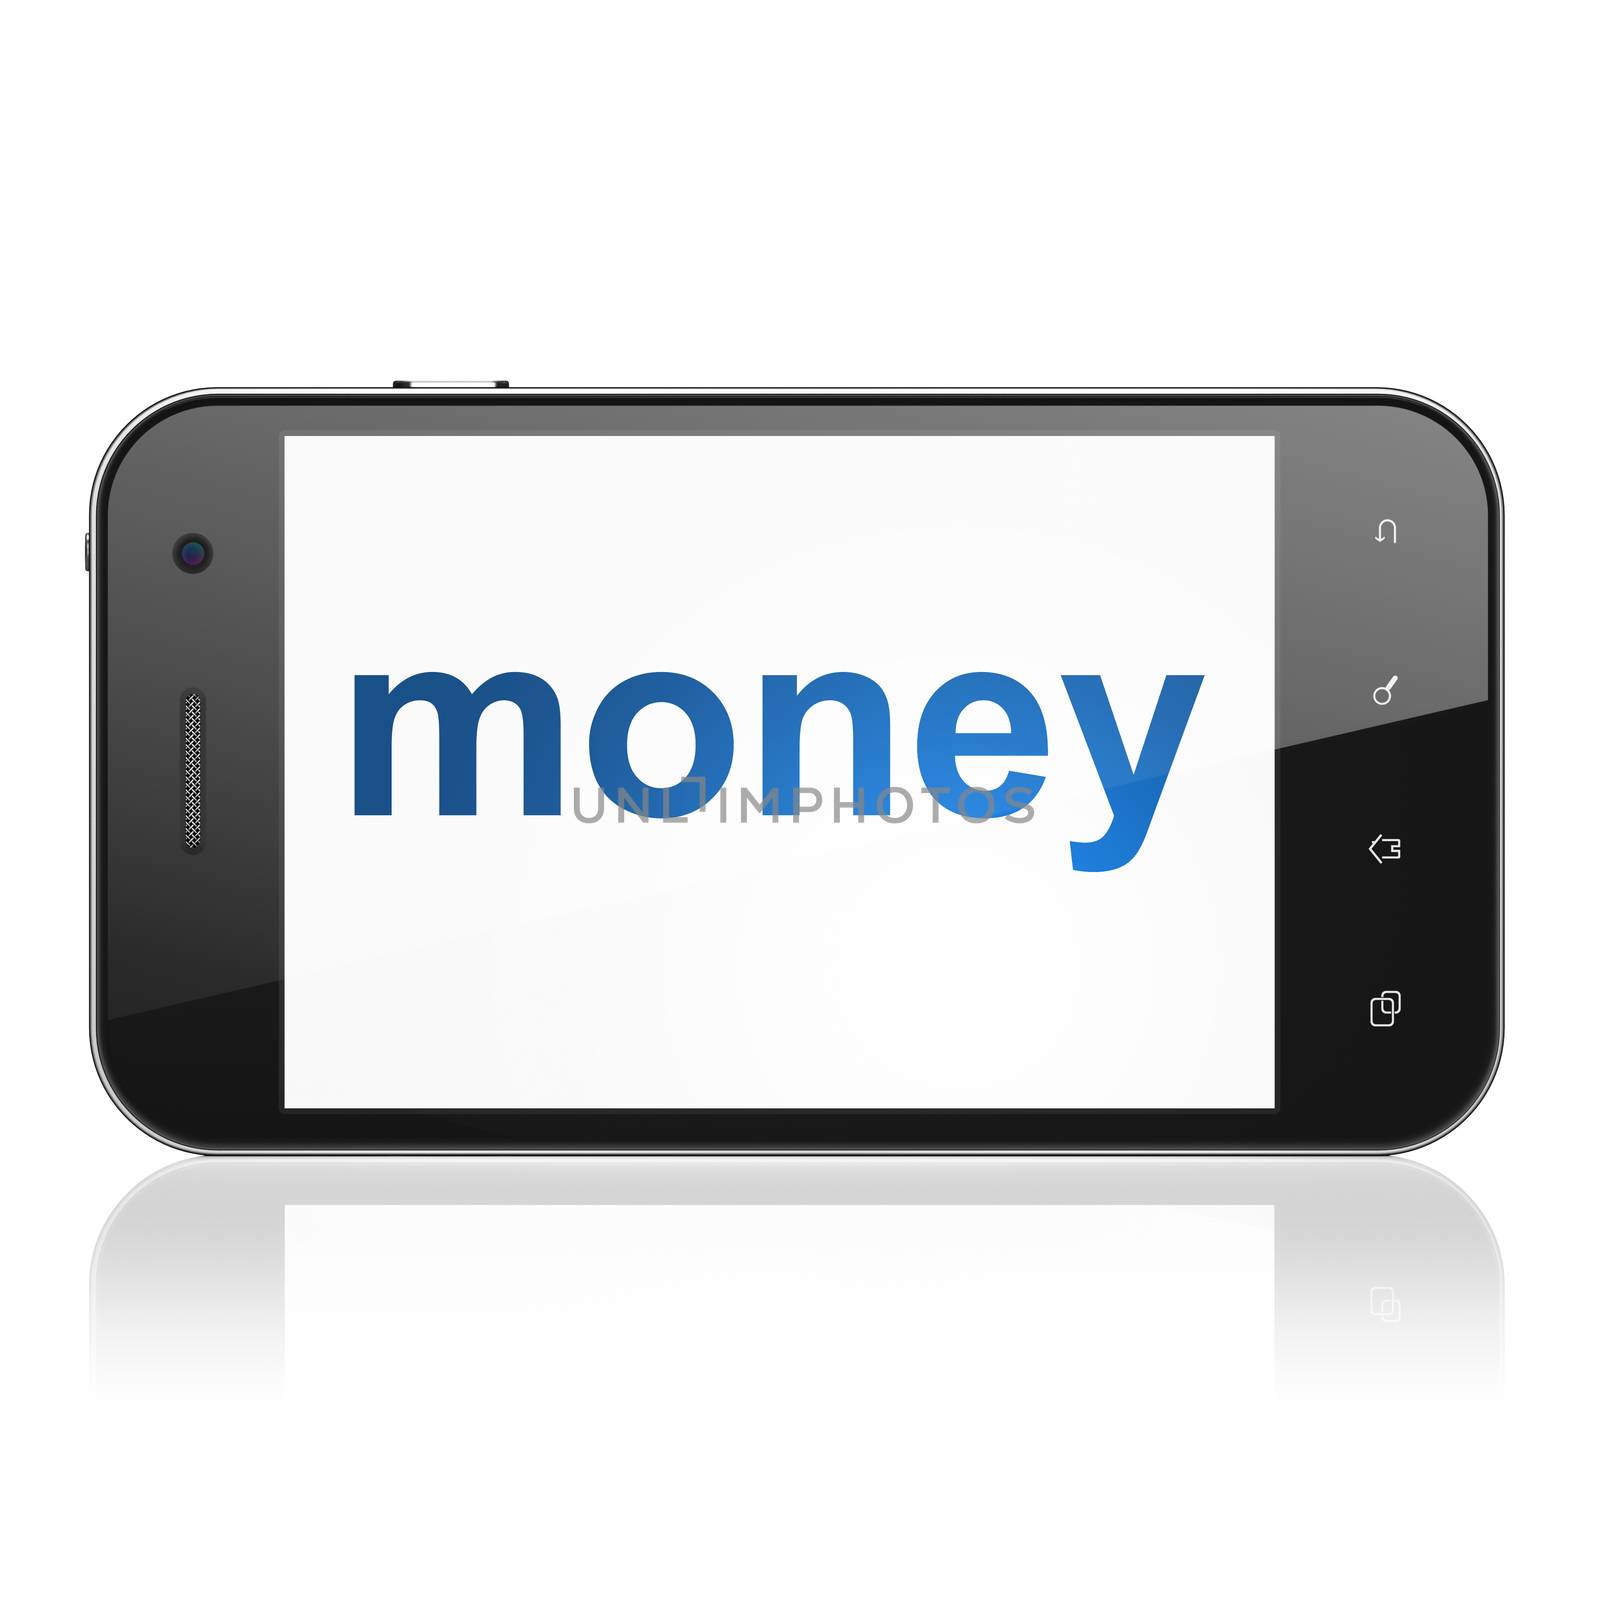 Business concept: Money on smartphone by maxkabakov